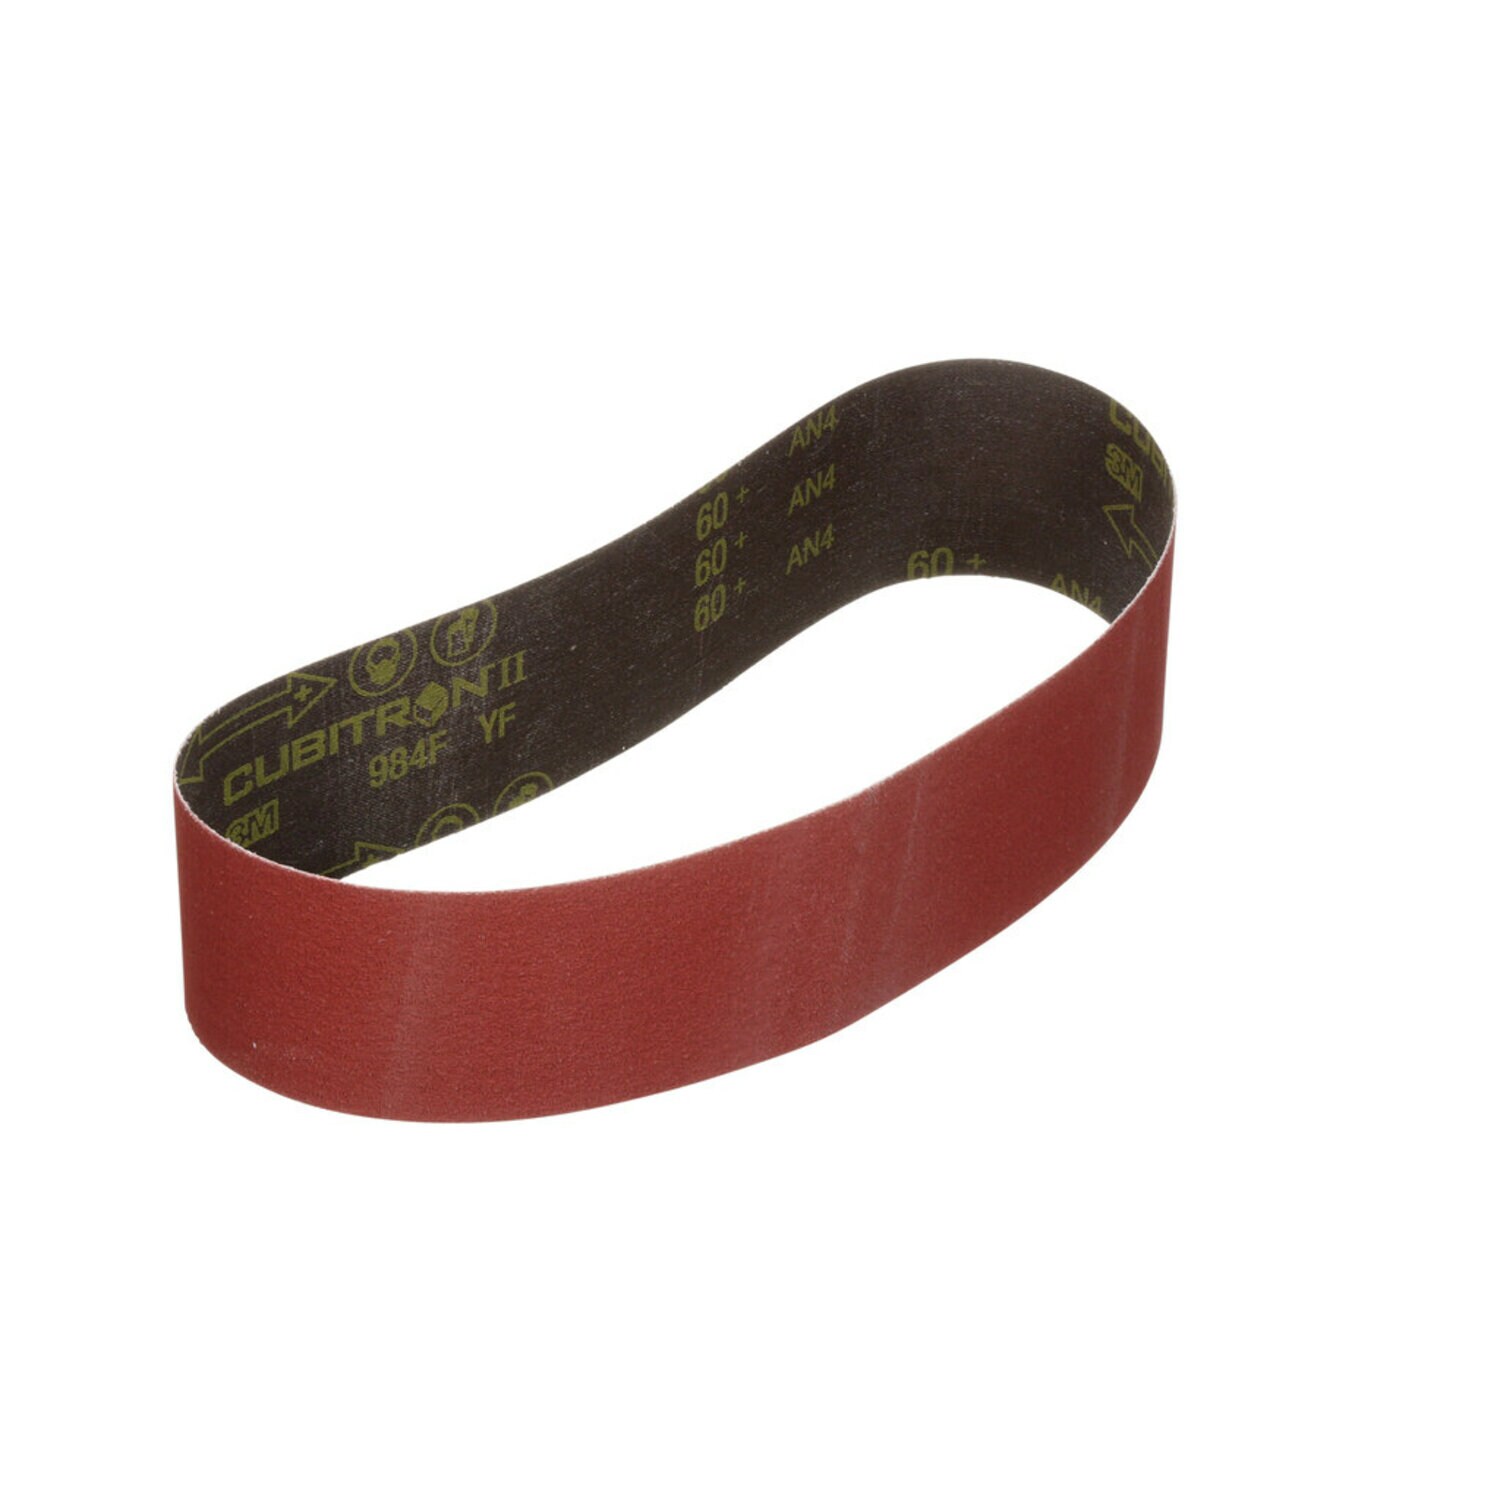 7010519575 - 3M Cubitron II Cloth Belt 984F, 80+ YF-weight, 1/2 in x 72 in,
Film-lok, Single-flex